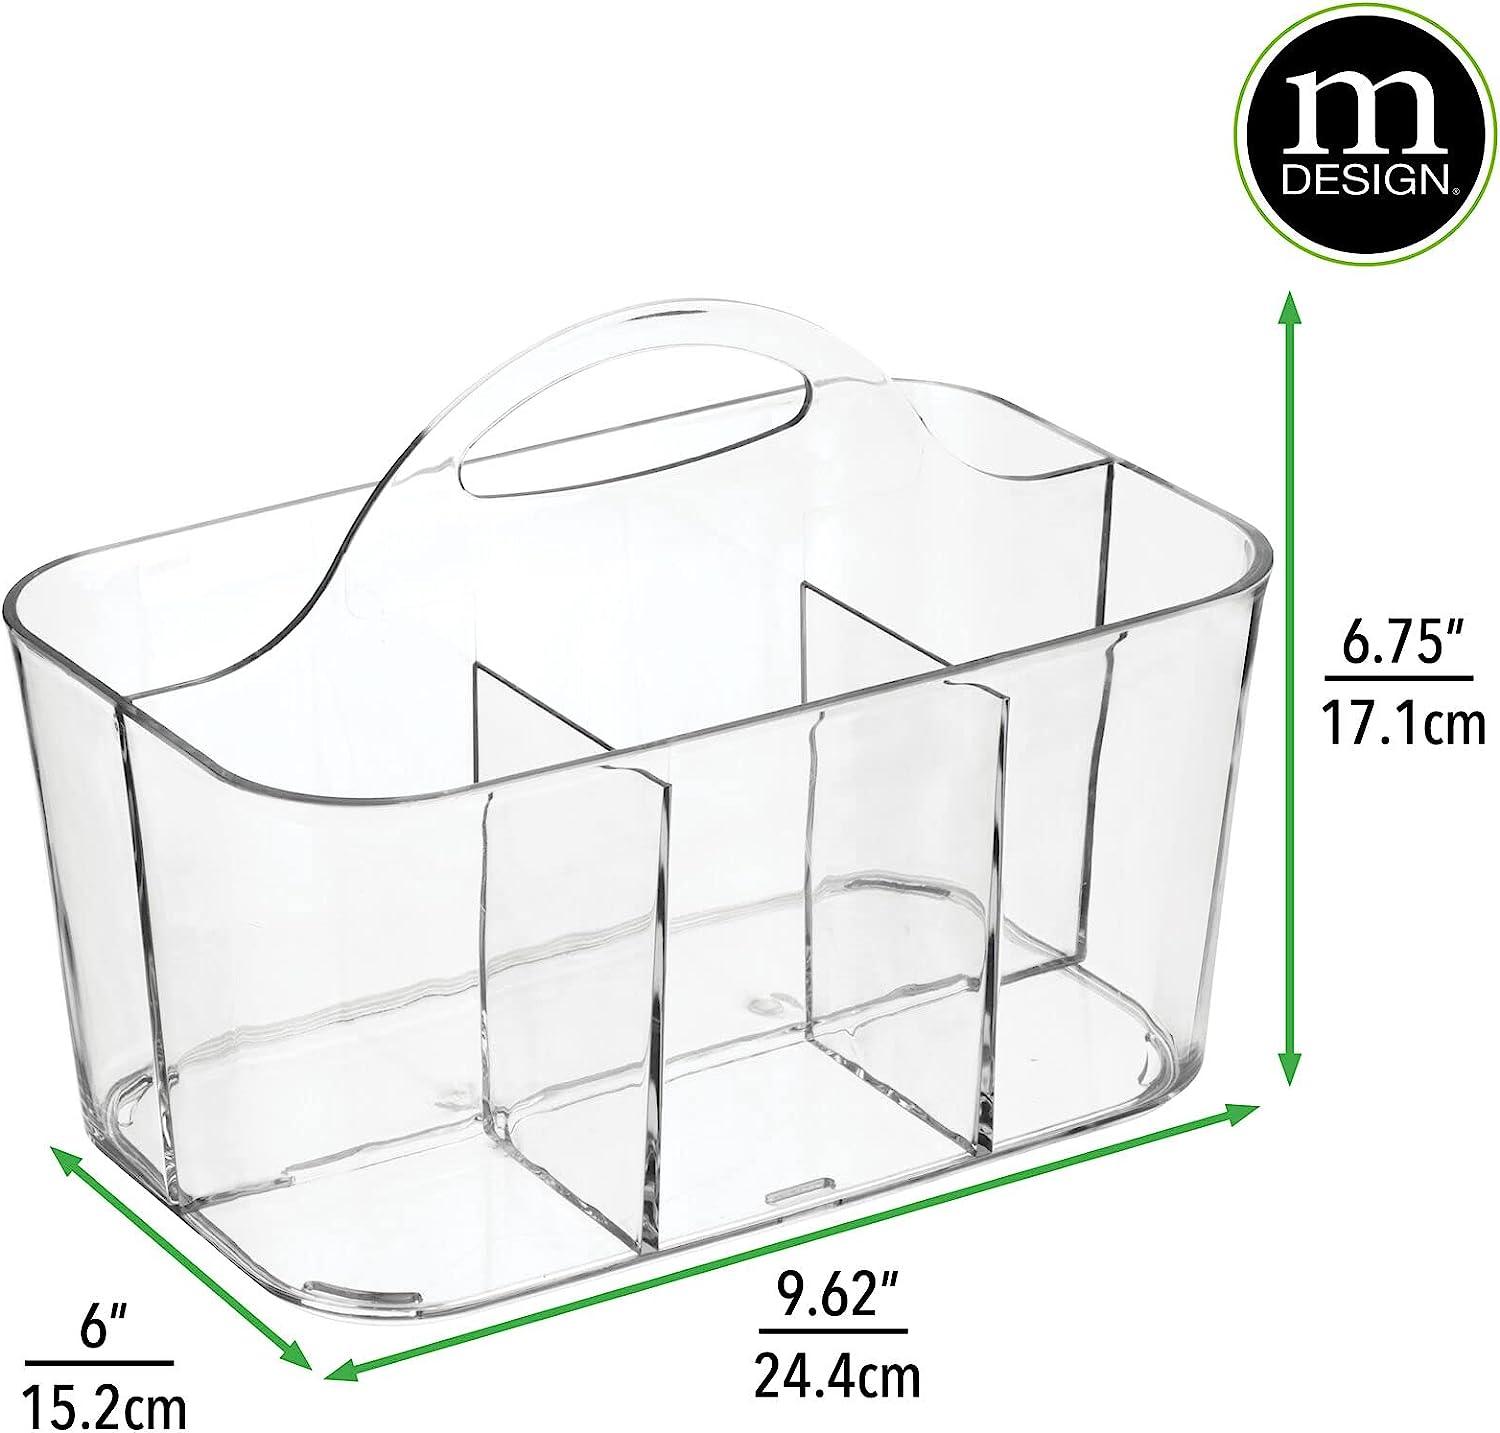 mDesign Plastic Sewing & Craft Storage Organizer Caddy Tote Bin - 2 Pack - White